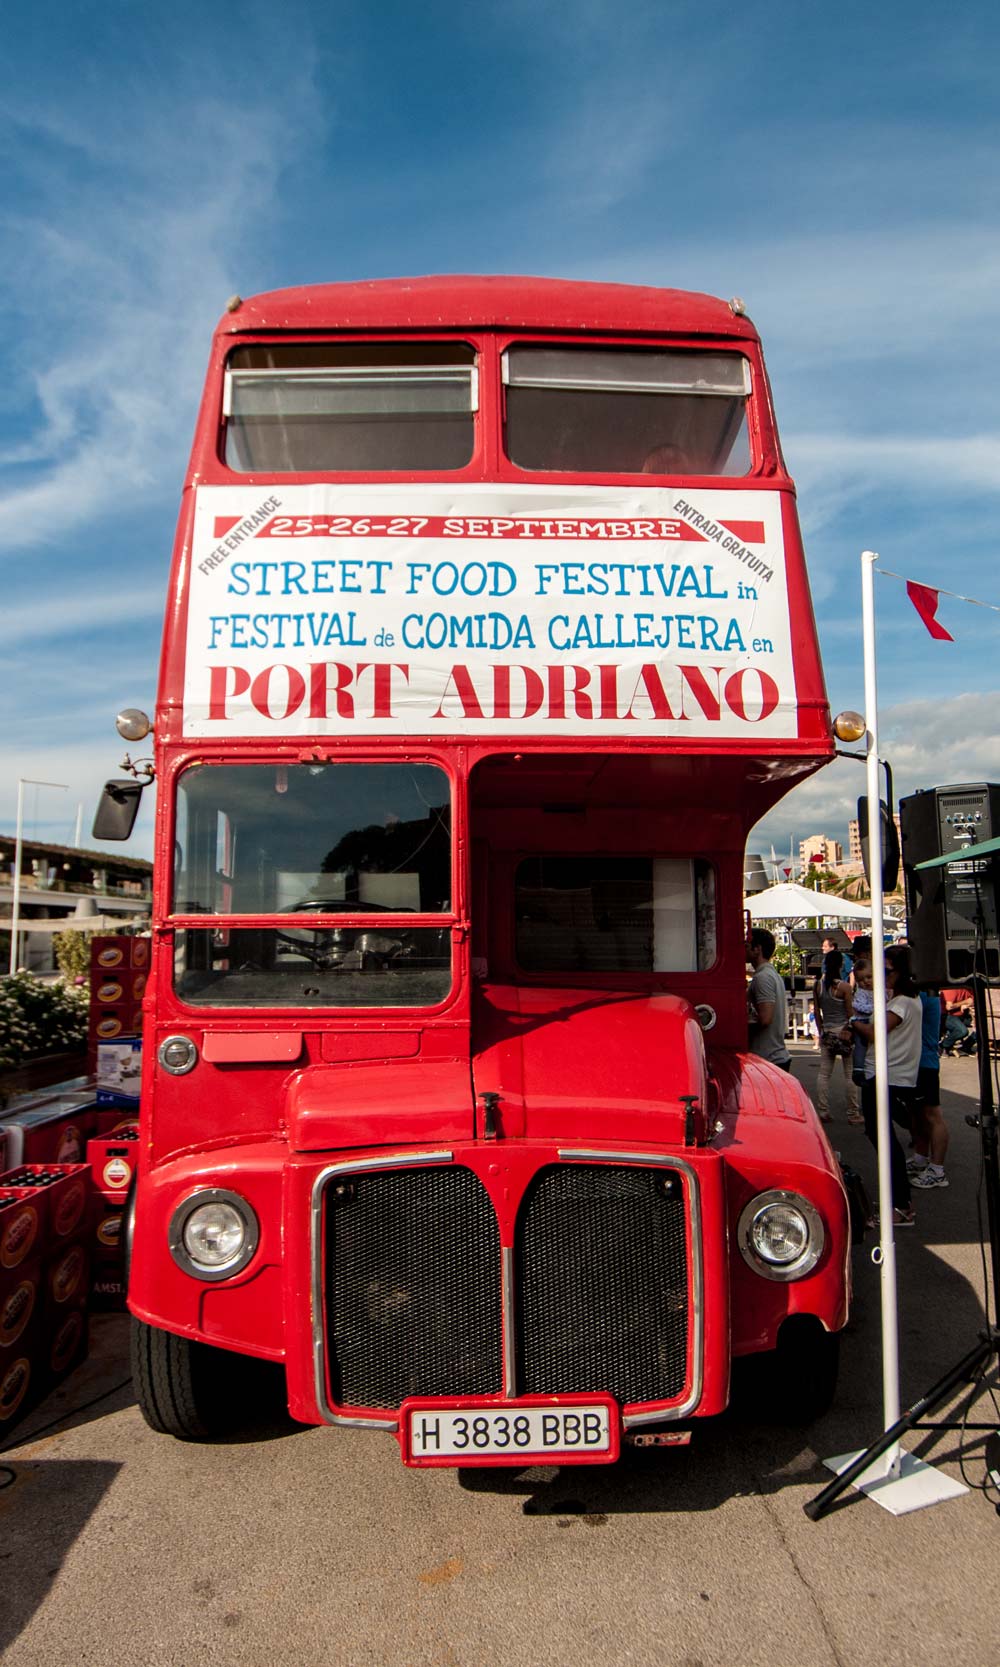 Port Adriano Mallorca street food festival red bus cafe restaurant casafari real estate neighbourhood guides